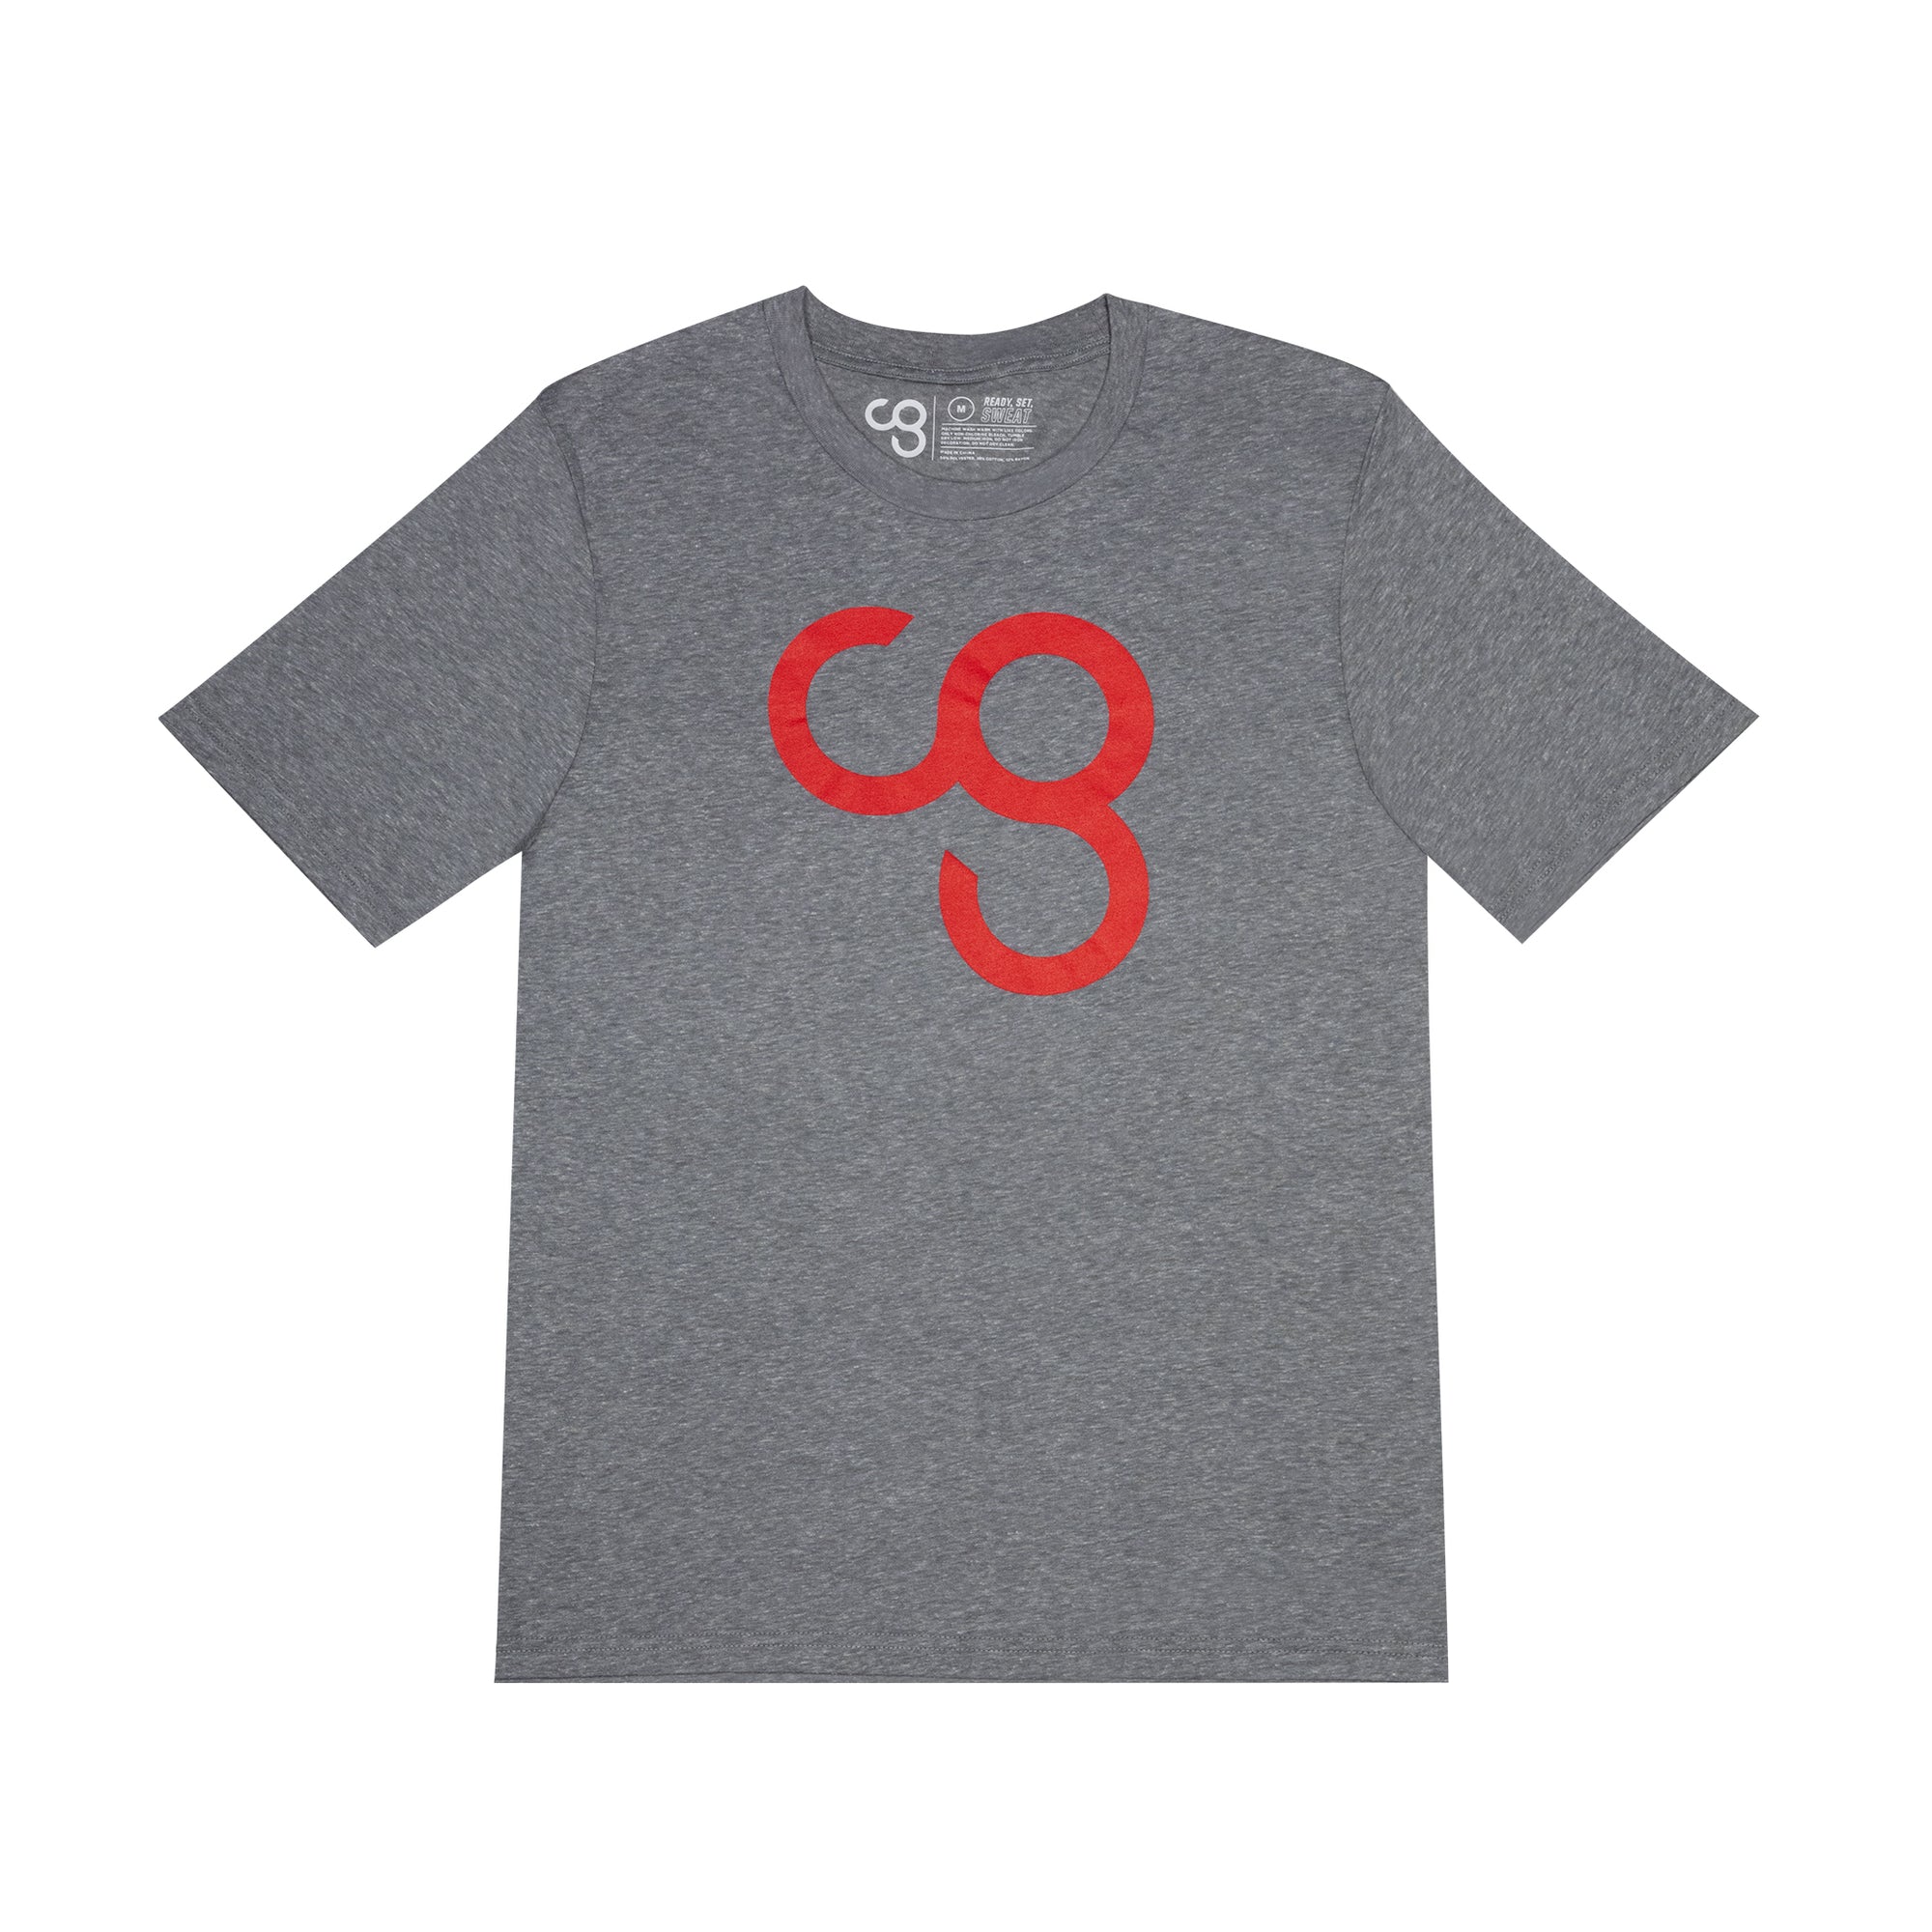 CG T-Shirt - Grey